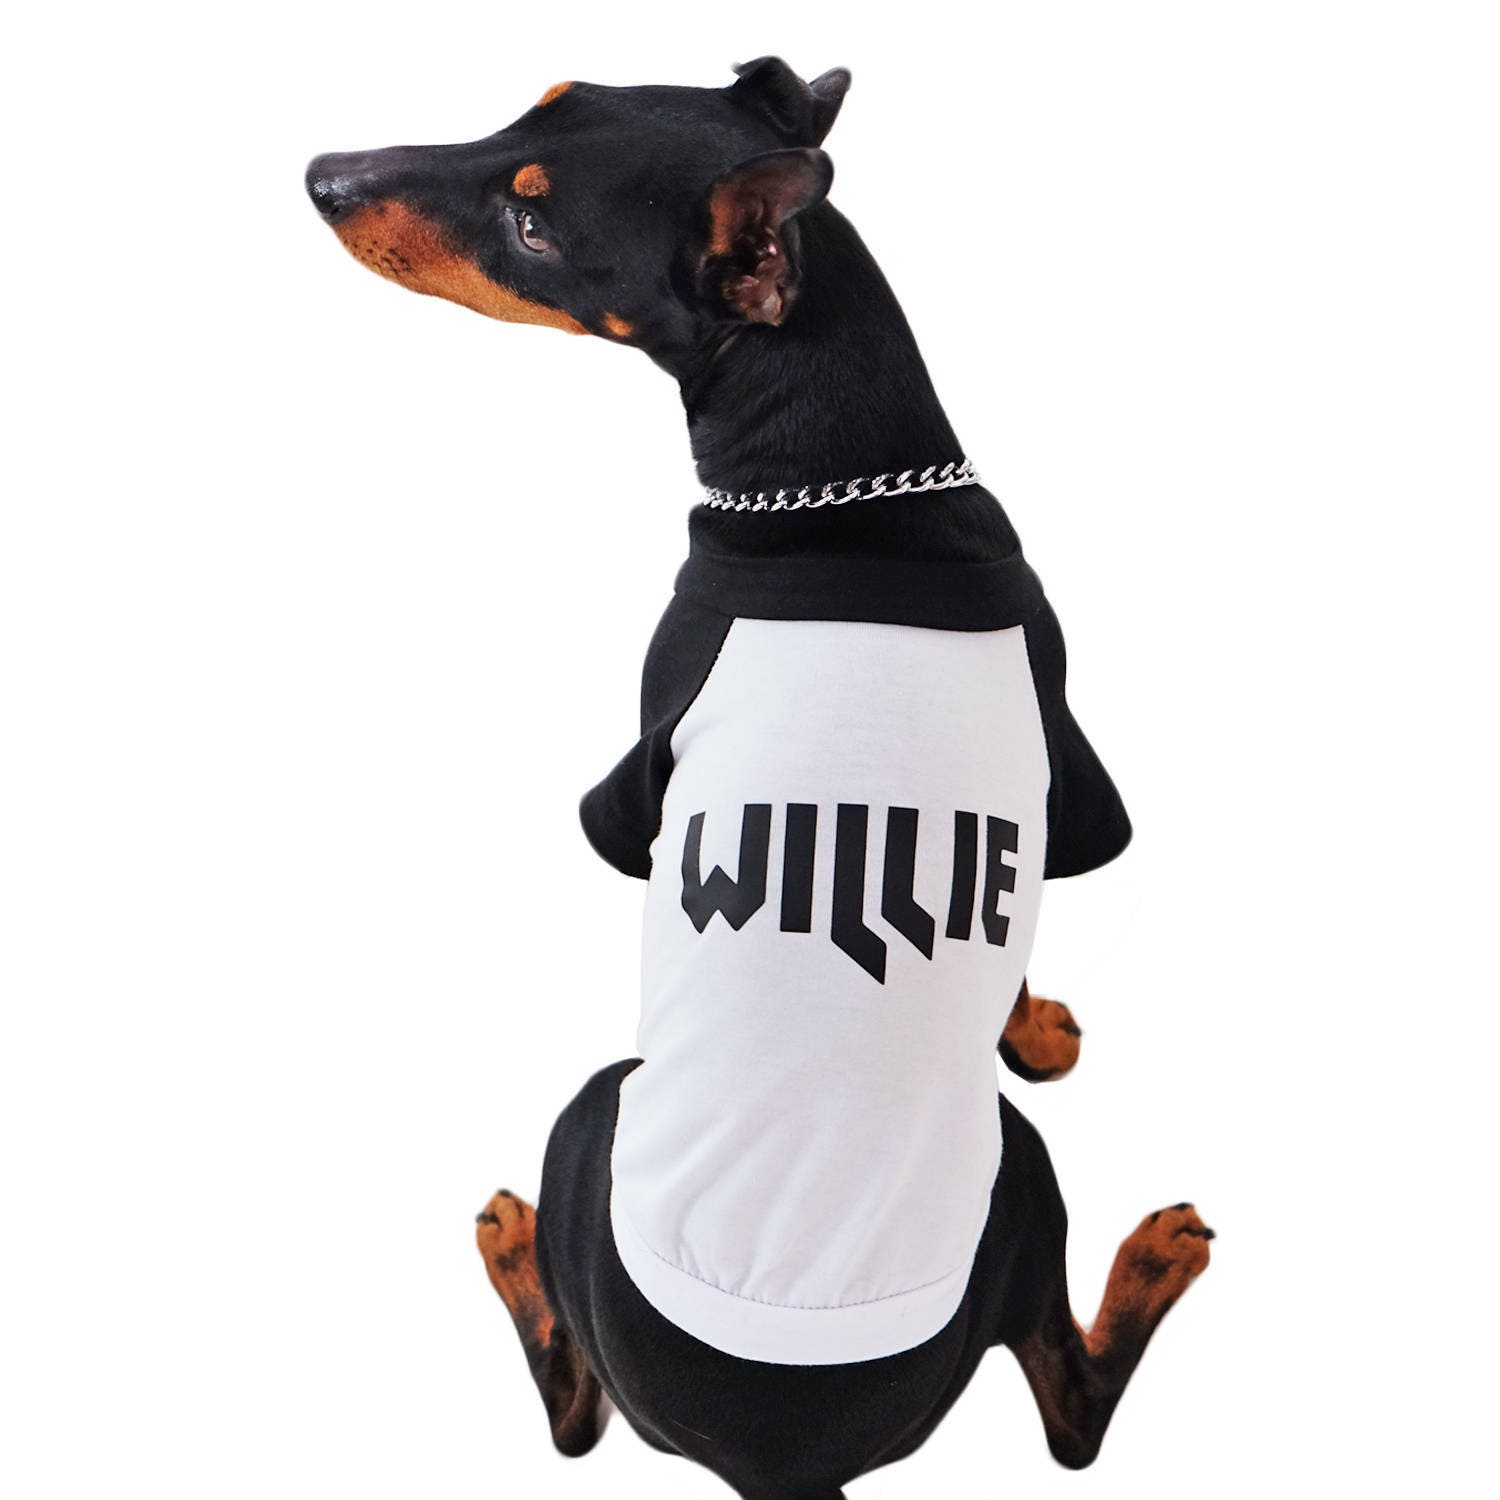 personalized dog jersey